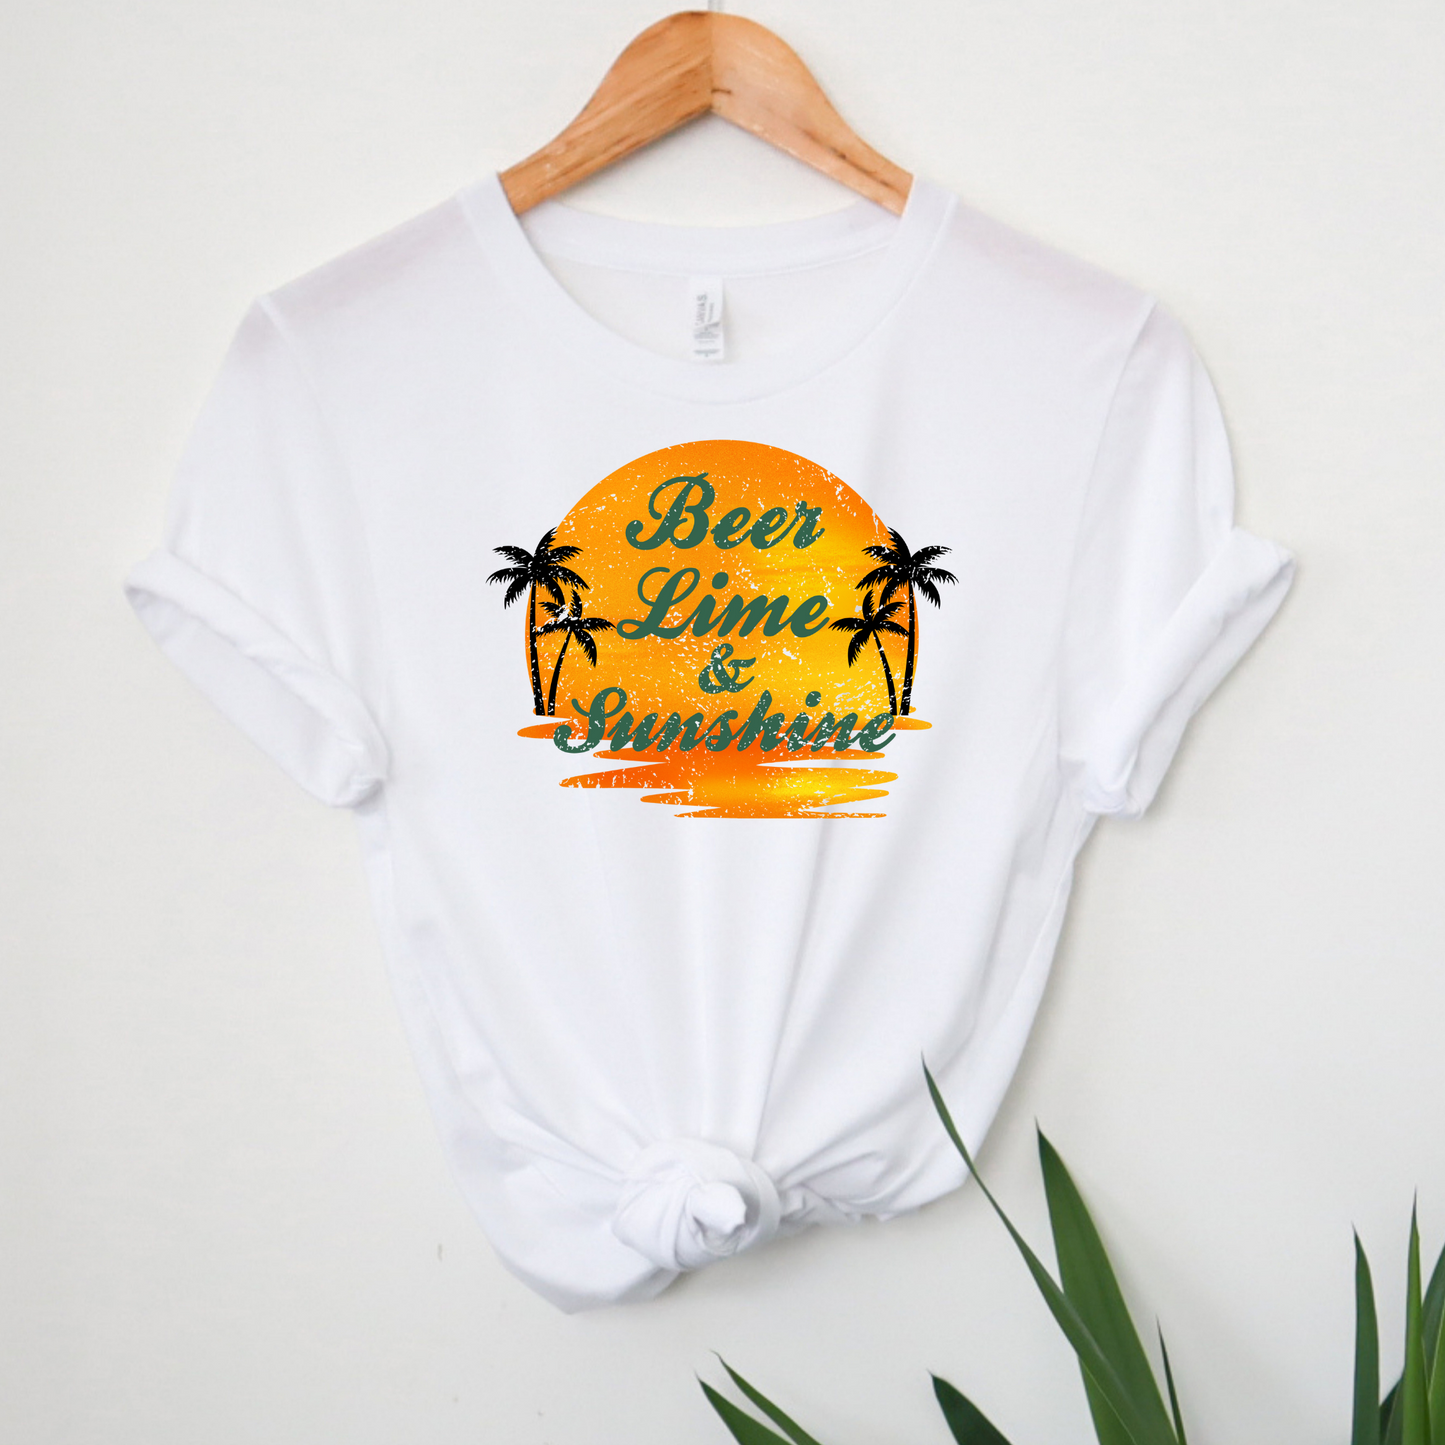 Beer Lime & Sunshine Essential Short Sleeve T Shirt - White